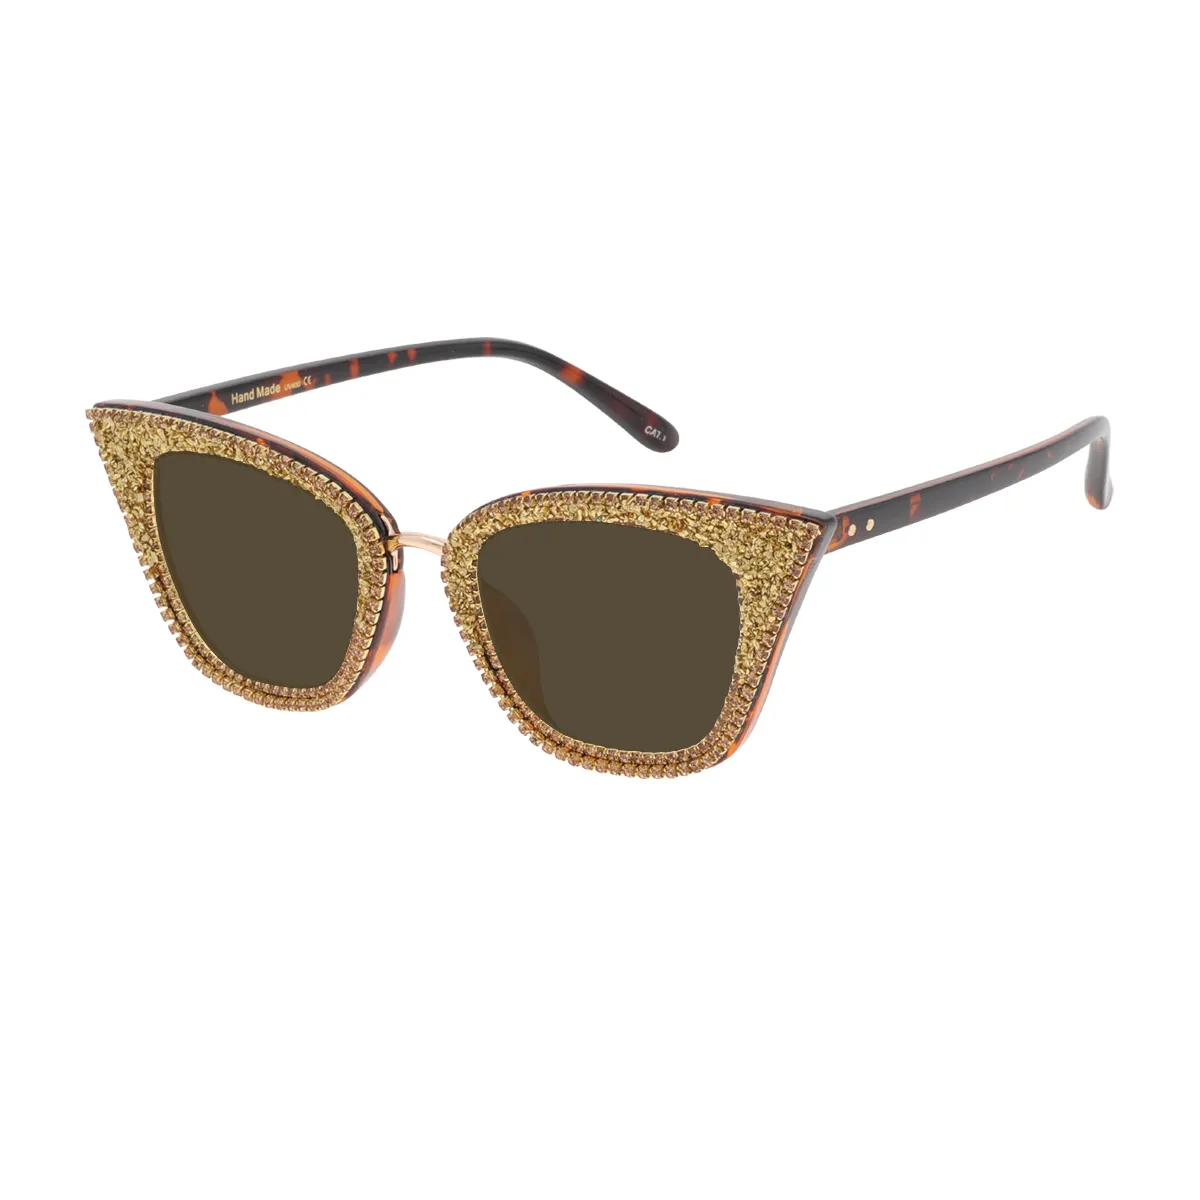 Renee - Cat-eye Demi Sunglasses for Women